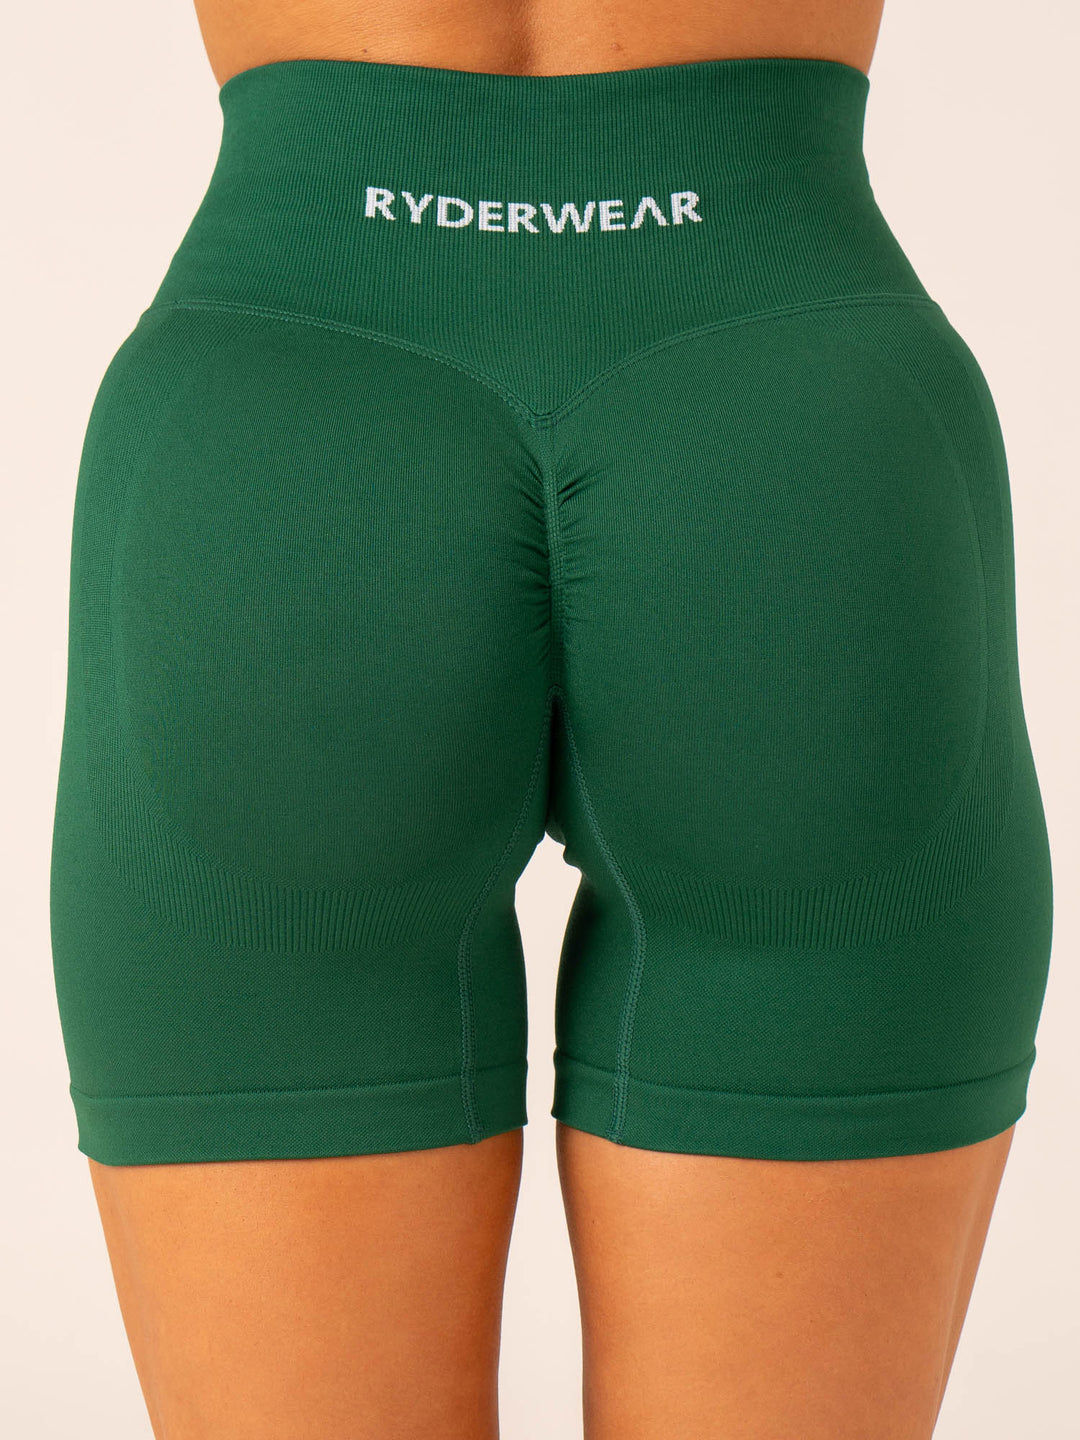 Lift BBL Scrunch Seamless Shorts - Emerald Clothing Ryderwear 